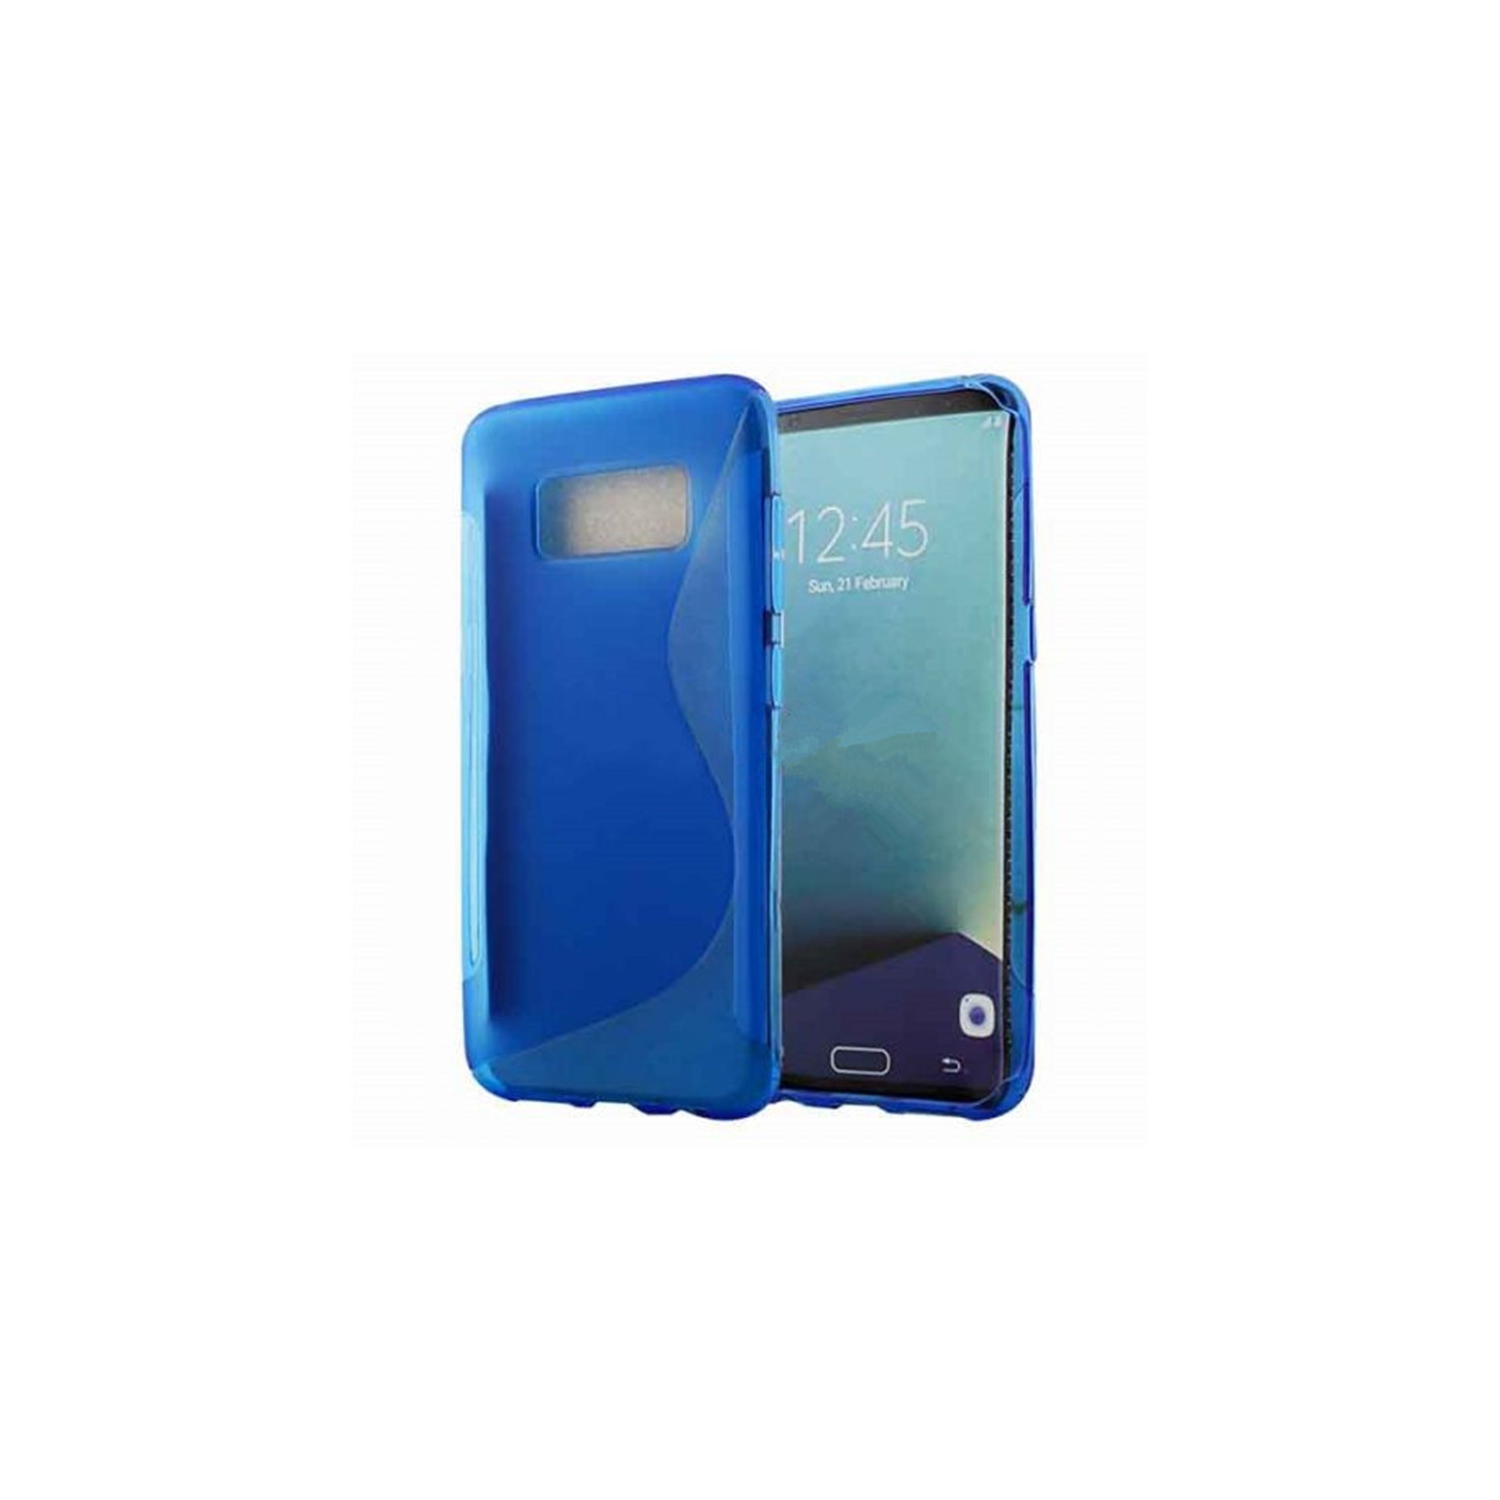 【CSmart】 Ultra Thin Soft TPU Silicone Jelly Bumper Back Cover Case for Samsung Galaxy S8 Plus, Blue